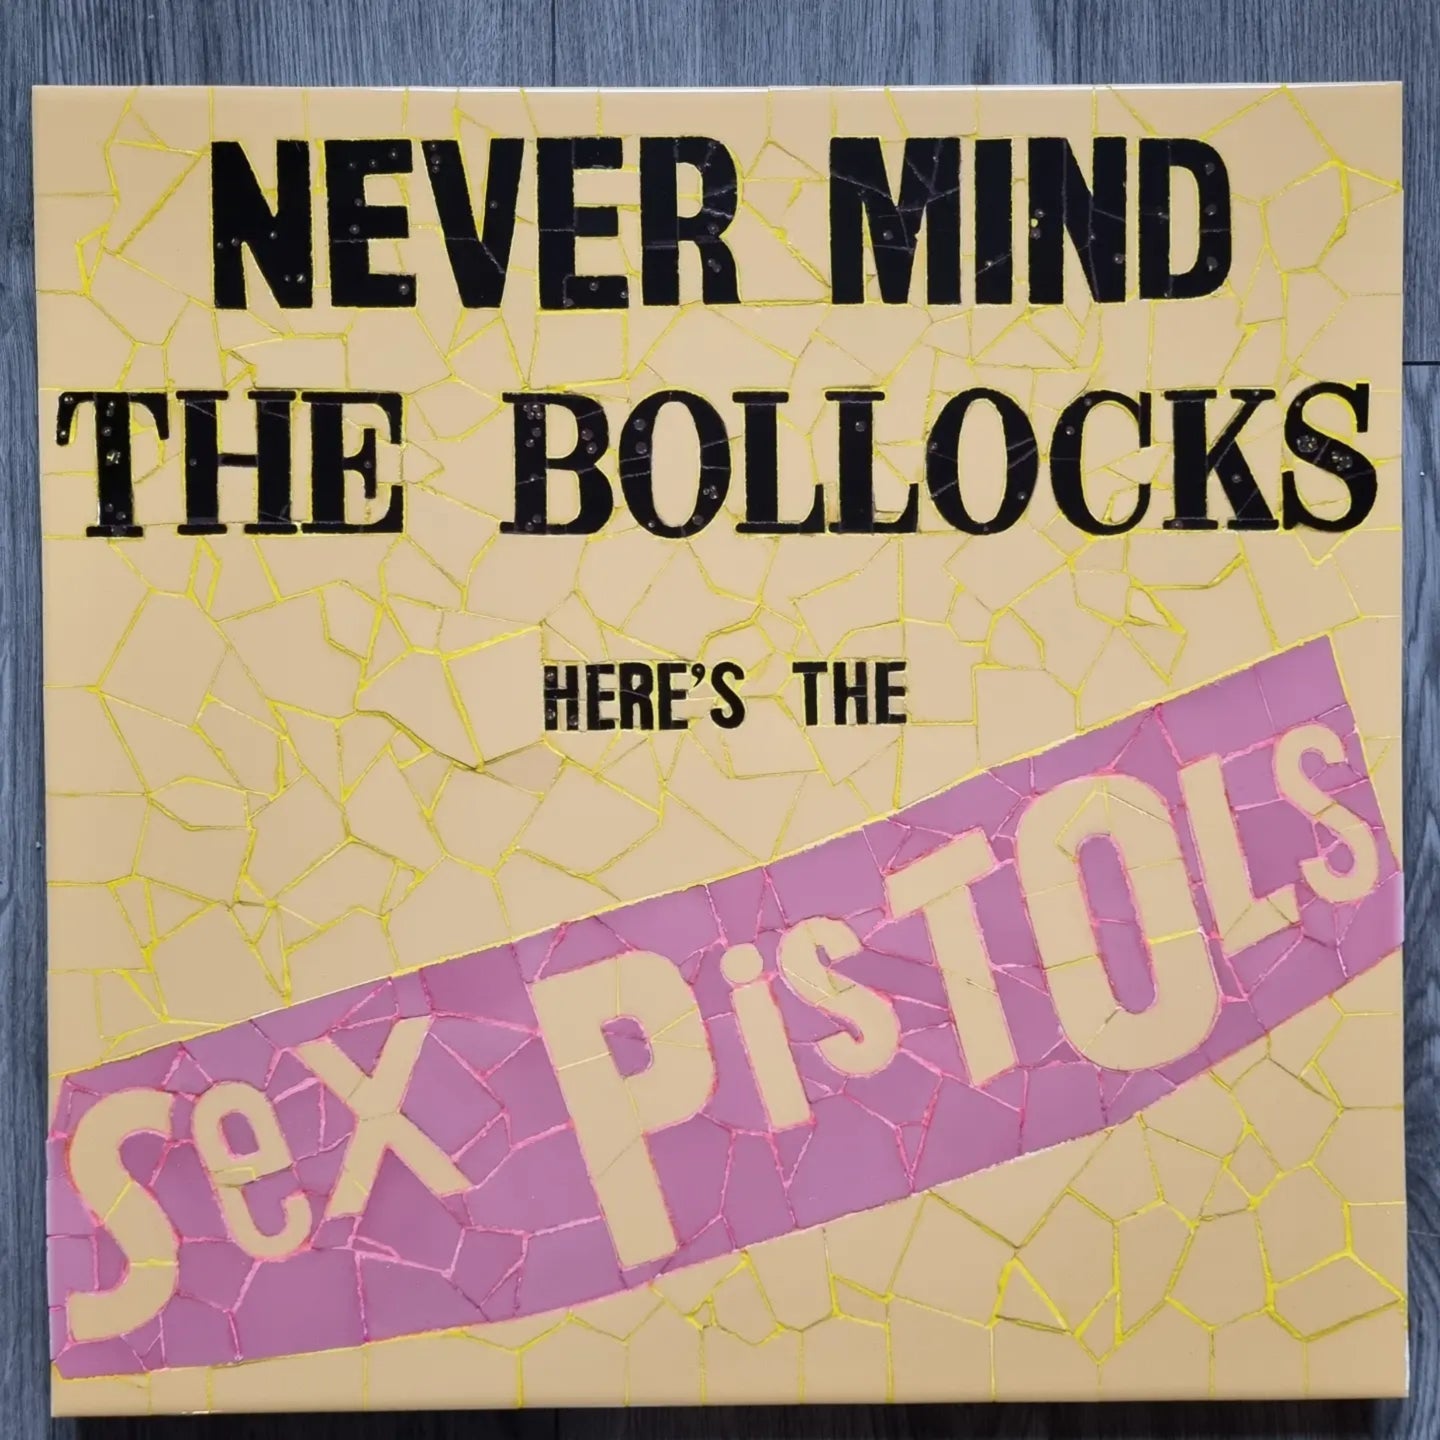 Sex Pistols - Nevermind the Bollocks